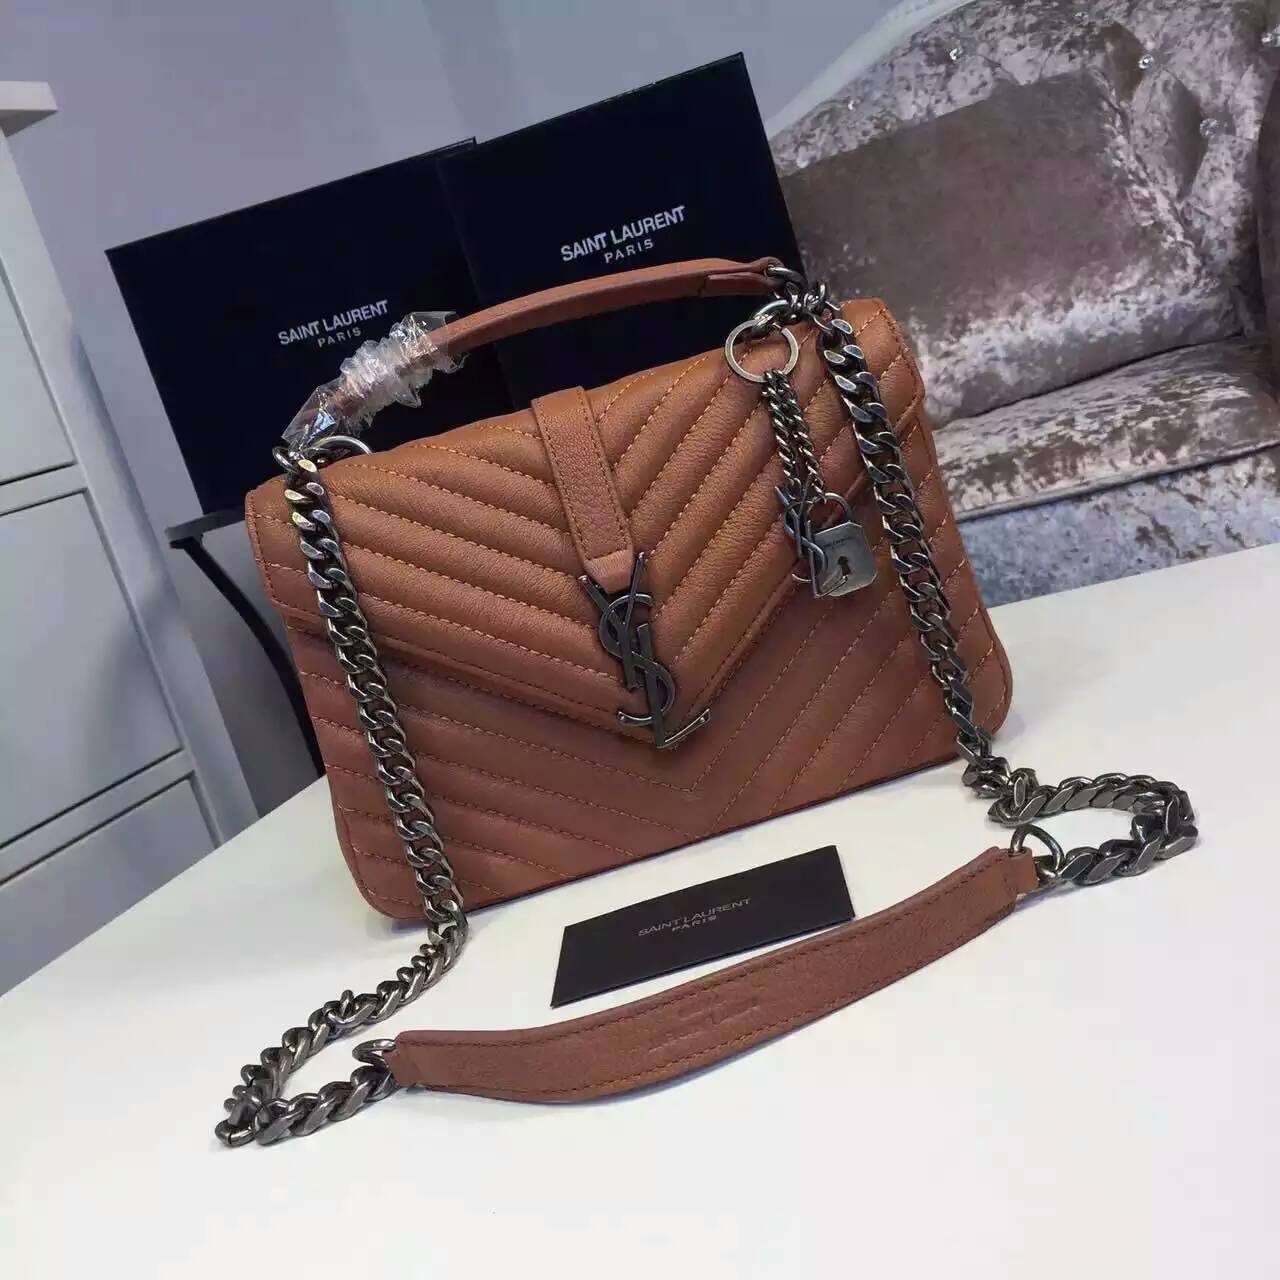 Yves Saint Laurent Handbags|YSL Bags 2013